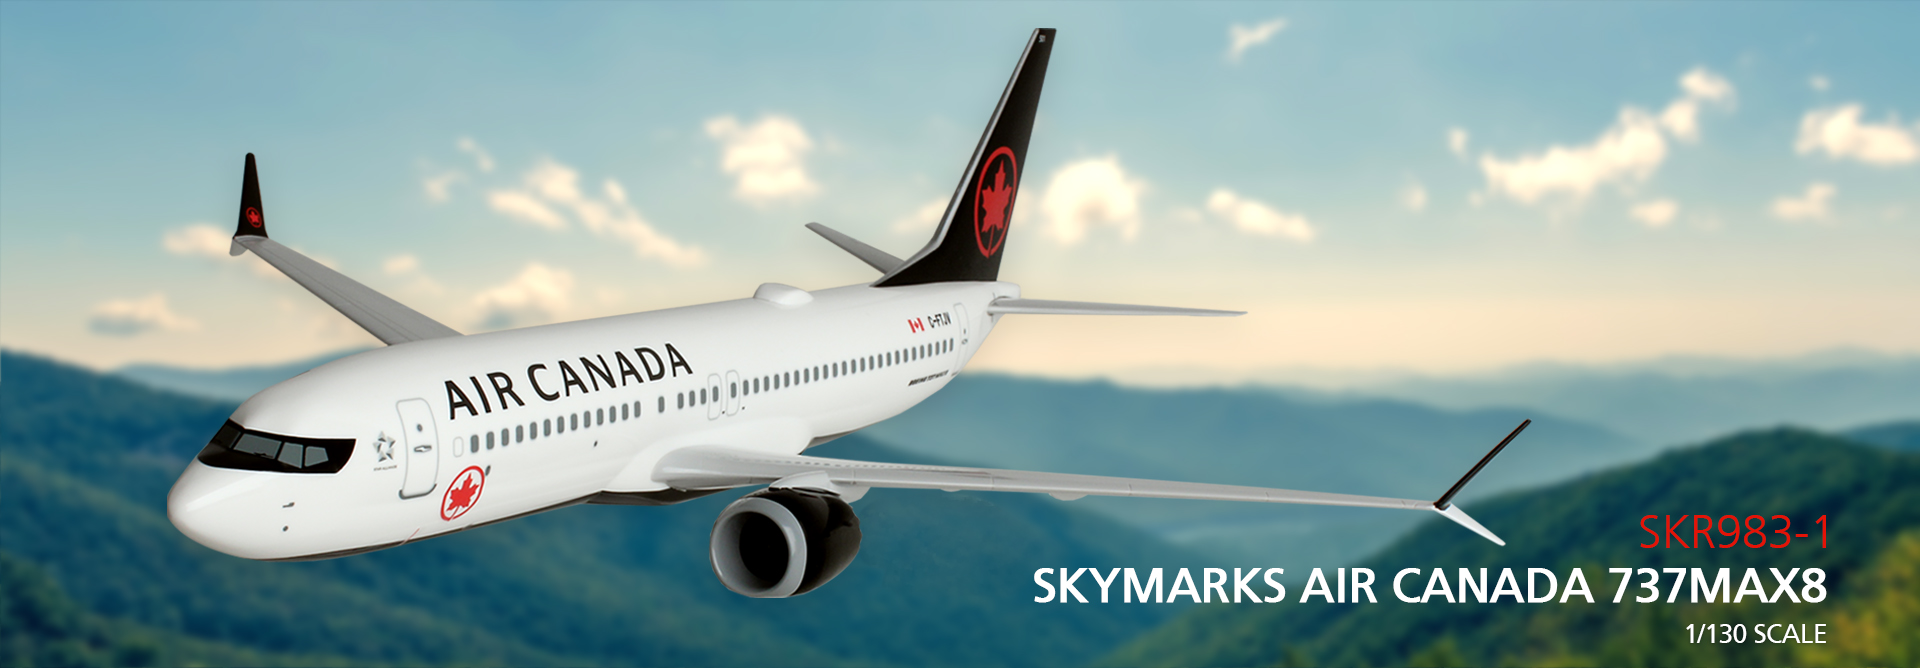 SKR983-1 SKYMARKSAIR CANADA 737 MAX-8 1/130 SCALE